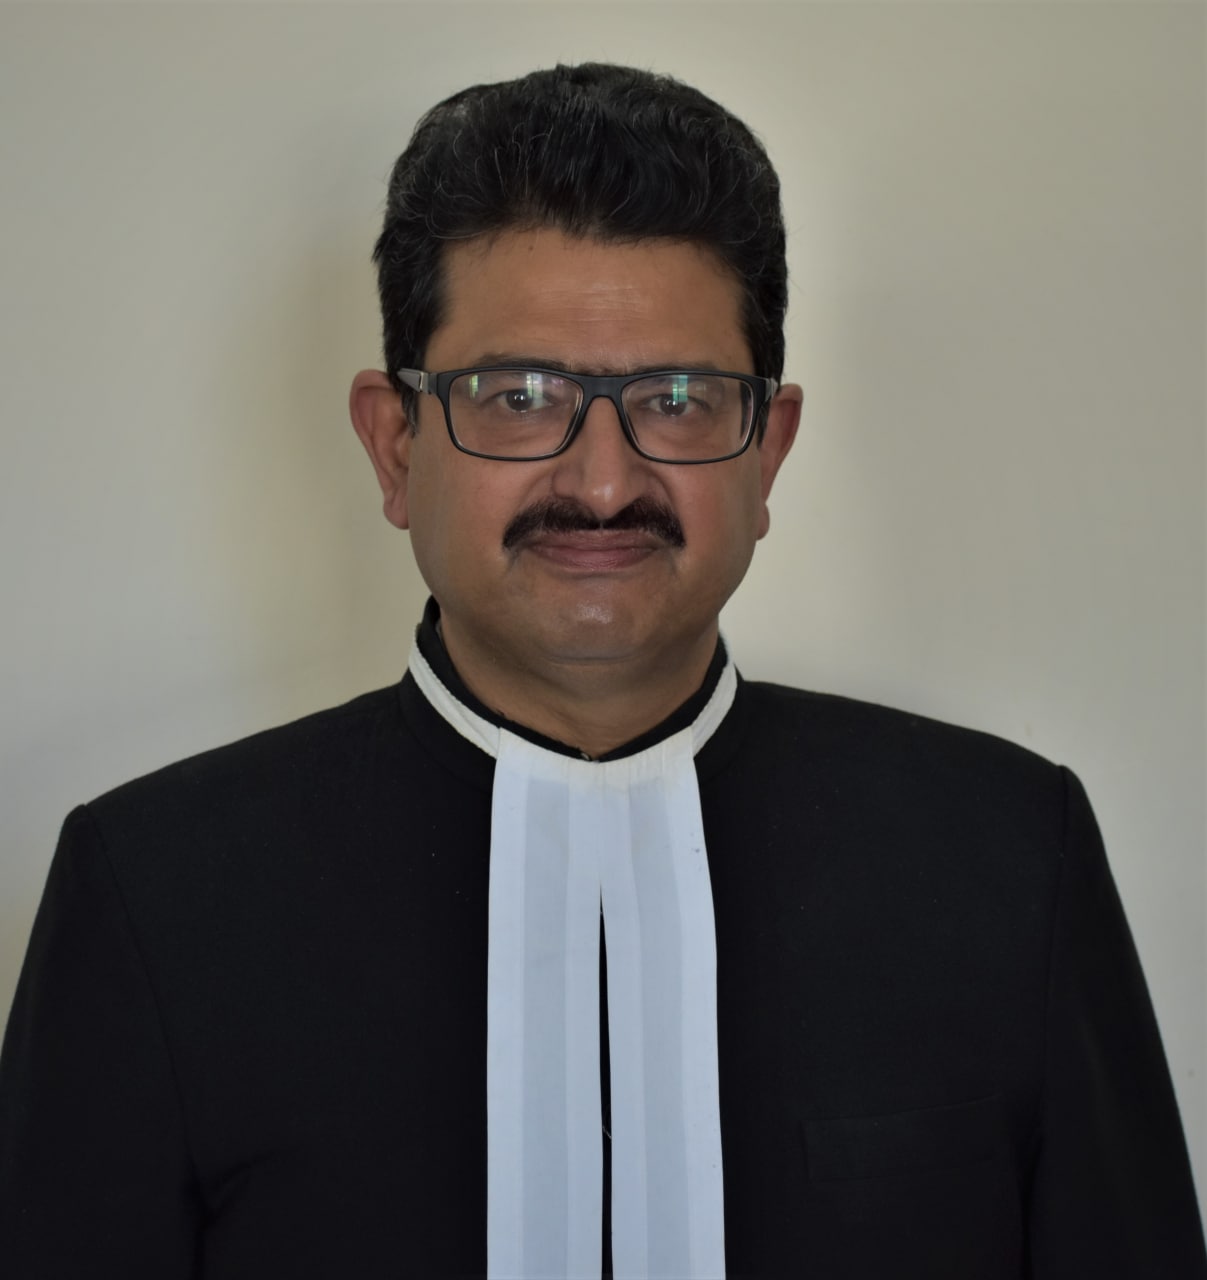 District Judge Pradeep Pant